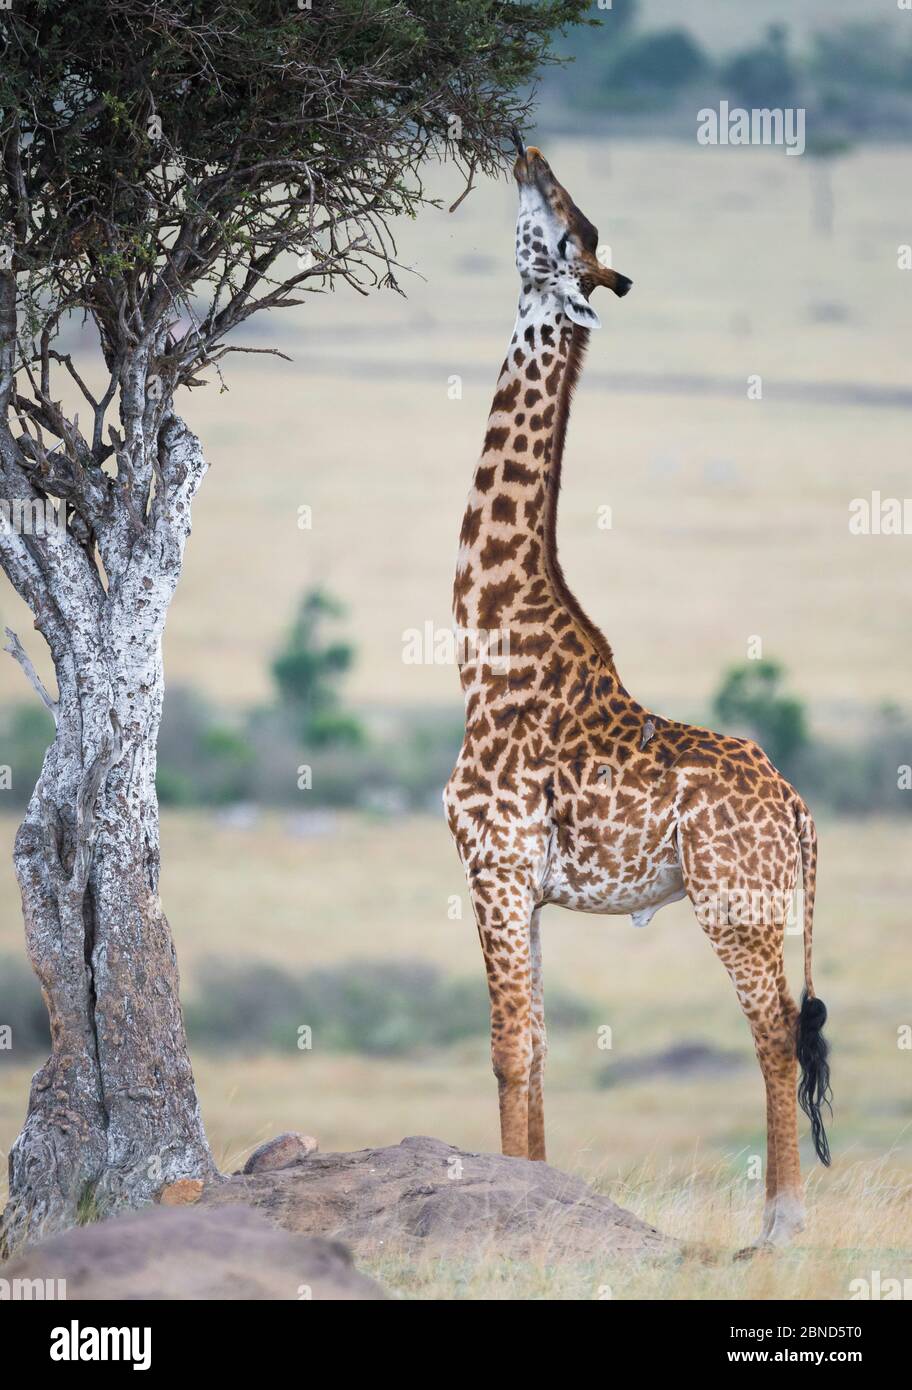 Giraffe (Giraffa camelopardalis) che si nutre su albero, Masai Mara, Kenya. Foto Stock